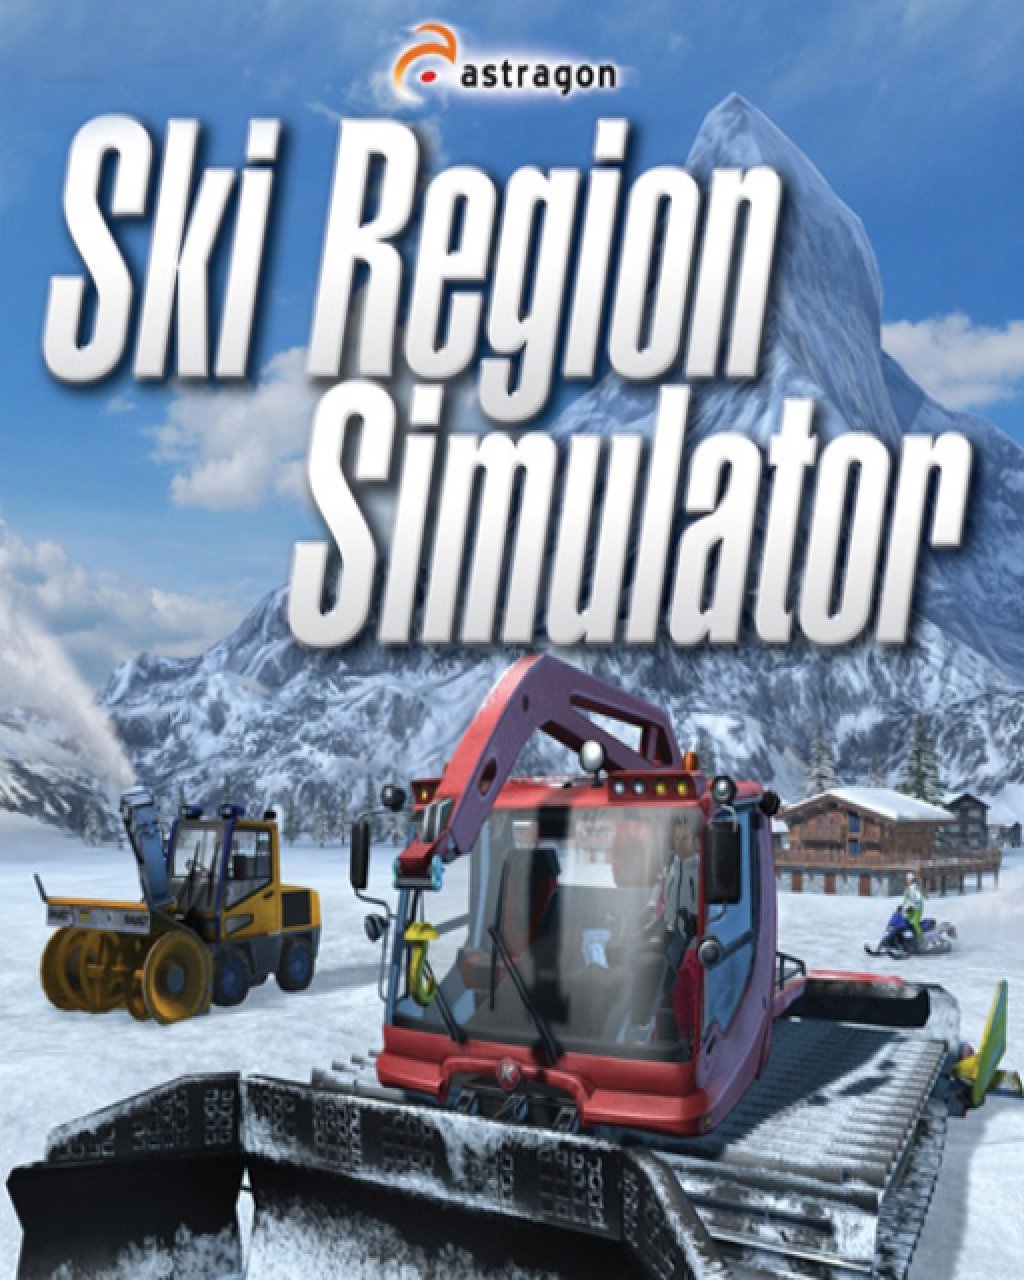 ESD Ski Region Simulator